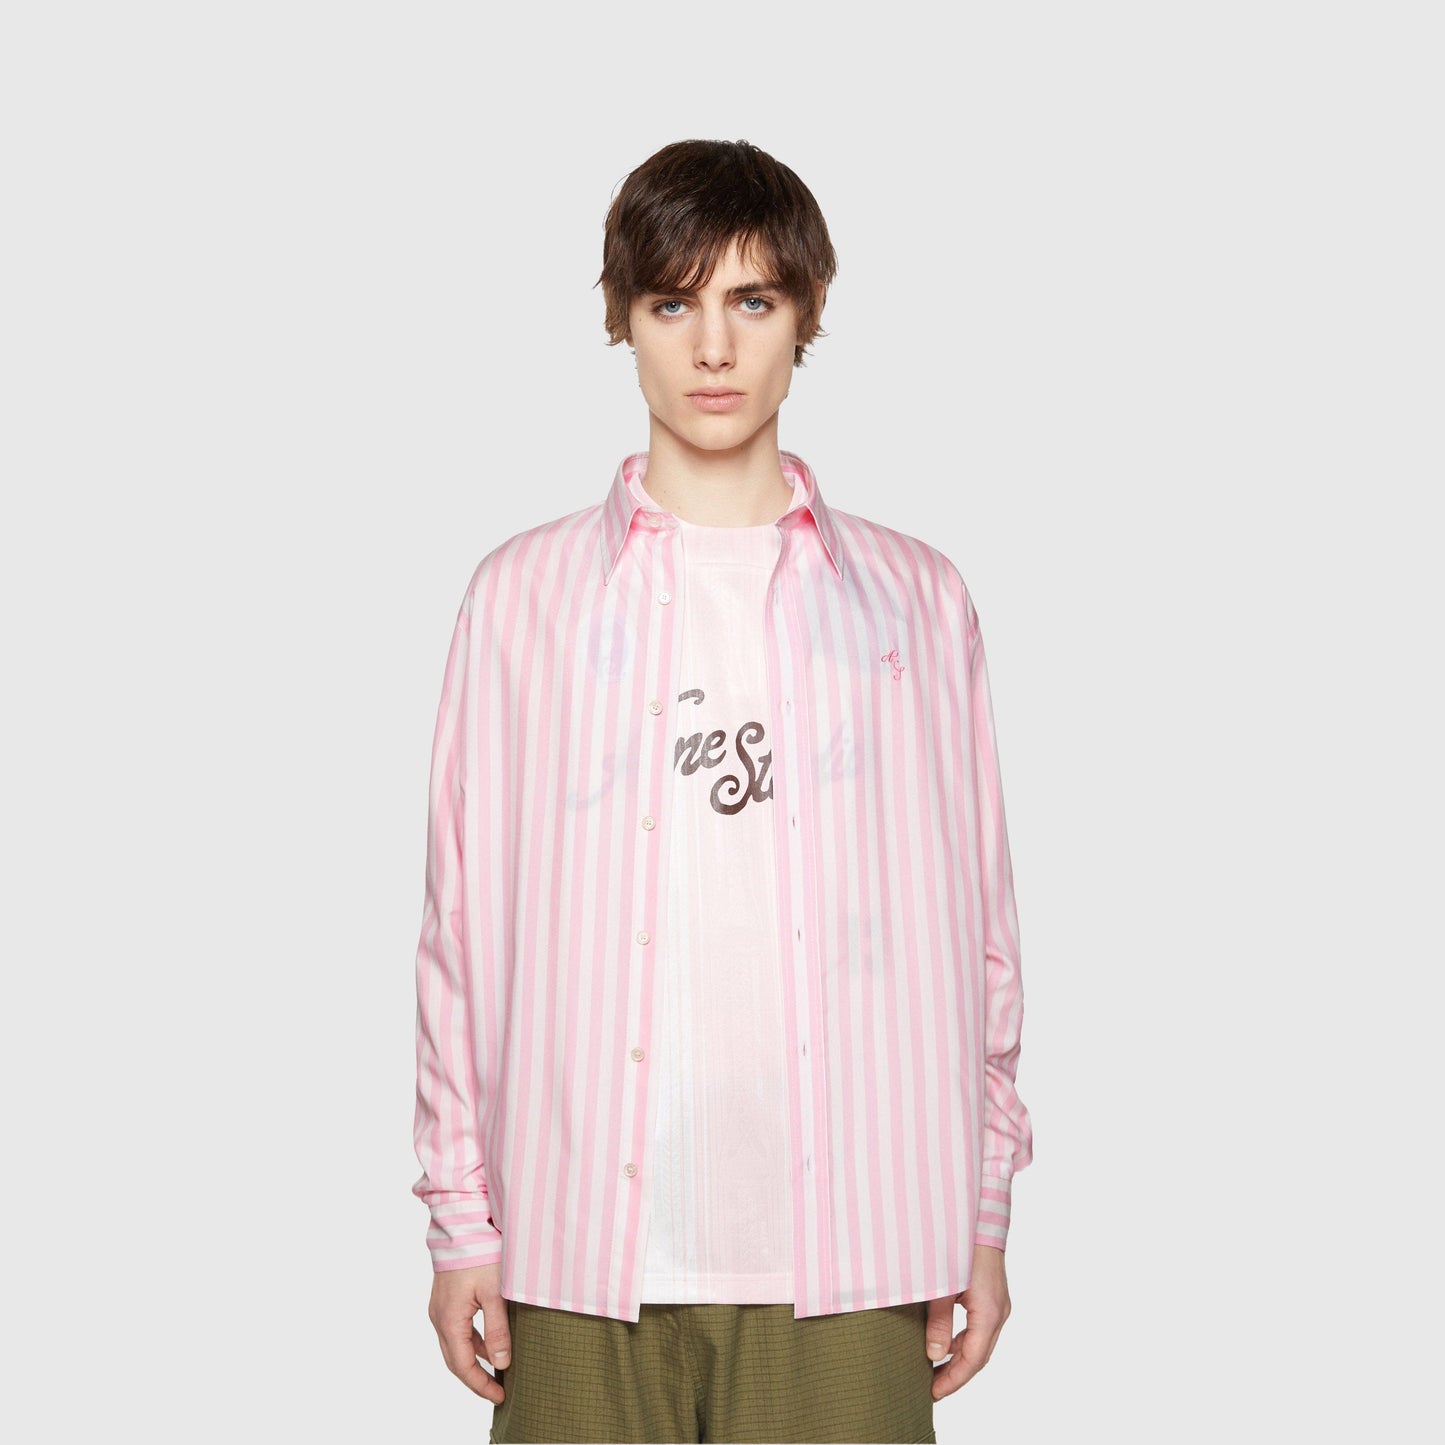 Acne Studios Shirt - Pink/White Shirt Acne Studios 